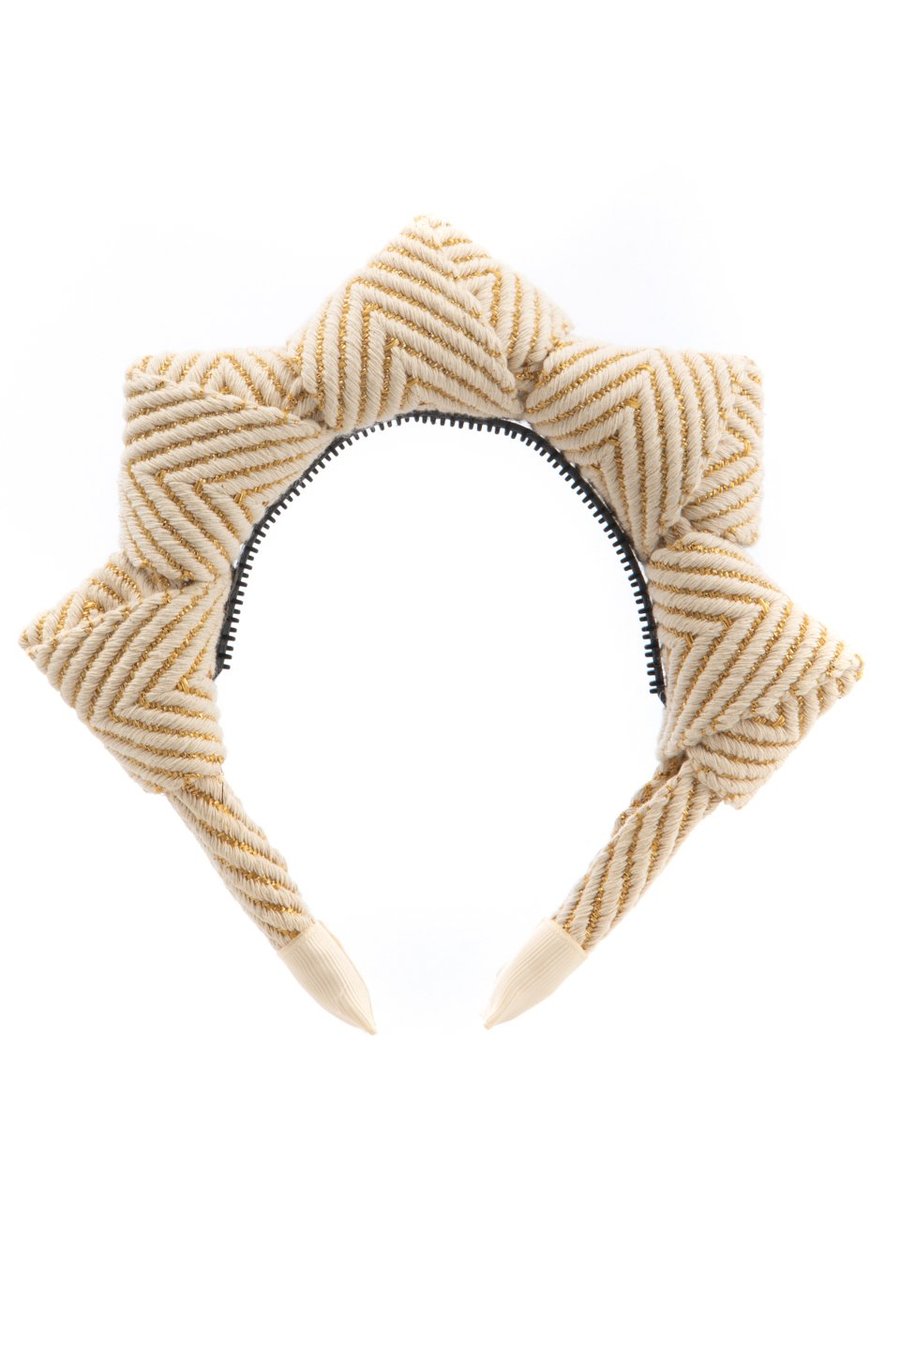 Mountain Queen Headband - Gold/Ivory